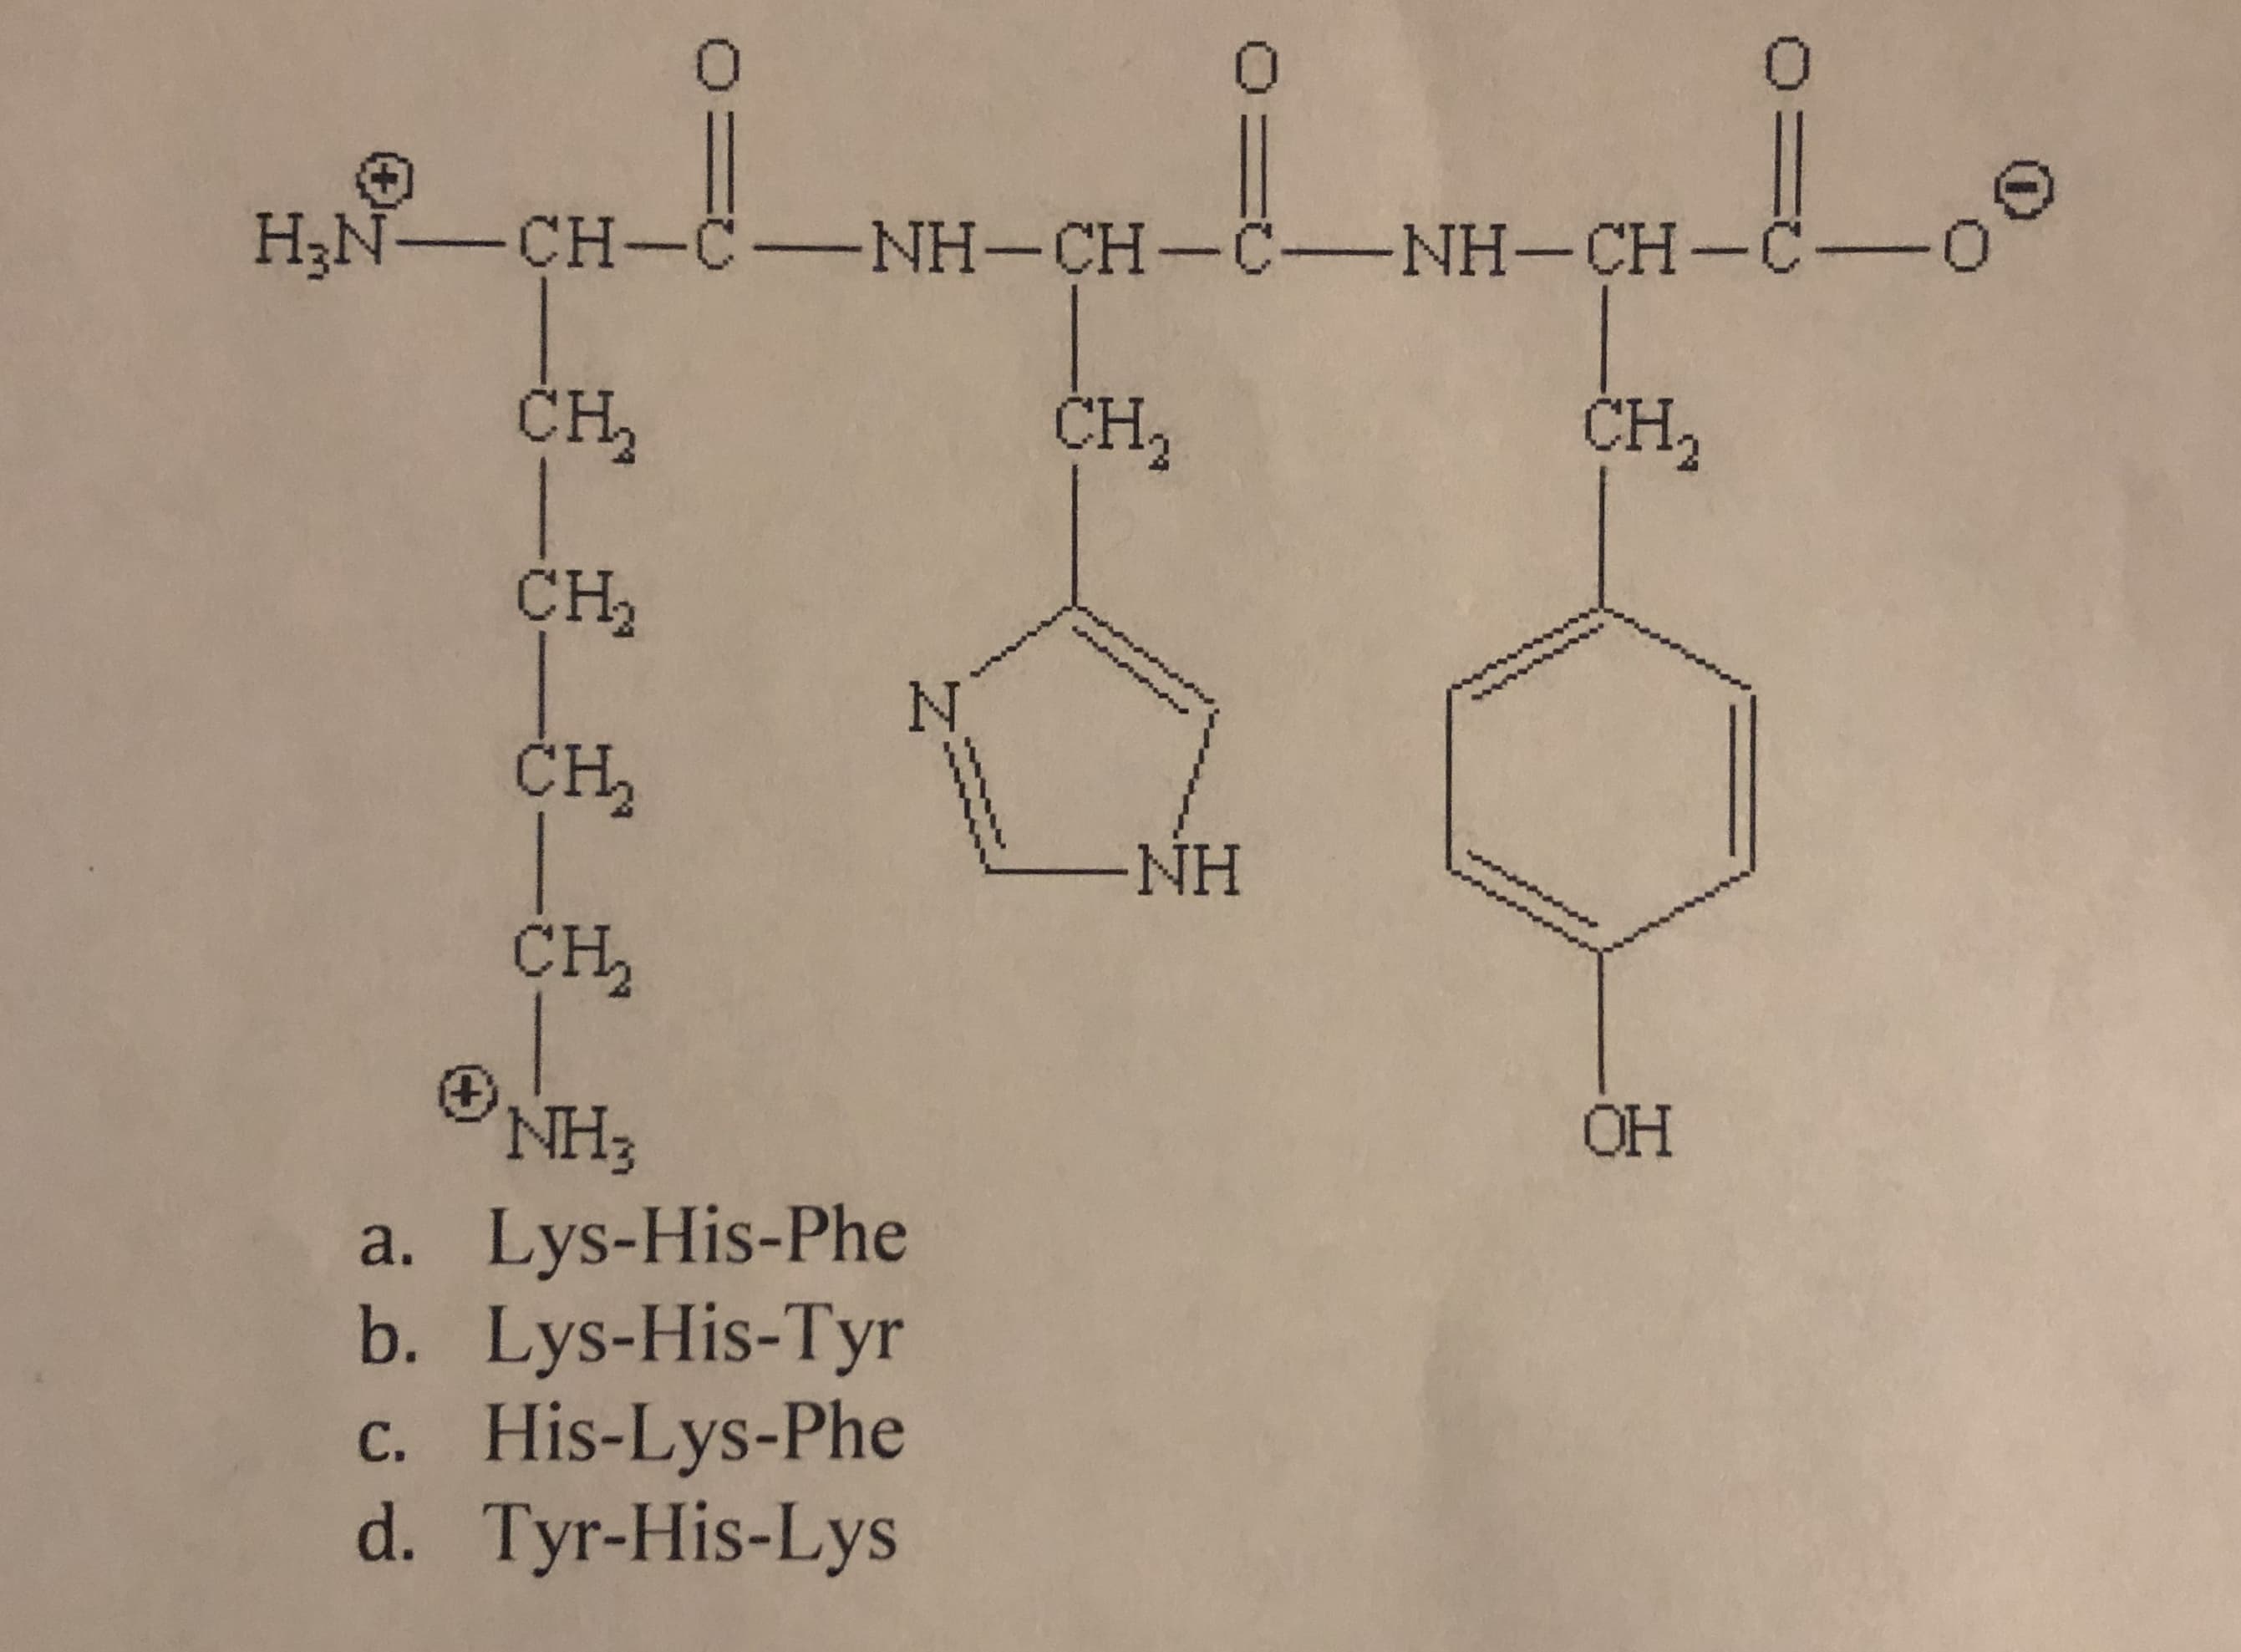 0
0
0
H3NCH-C-NH-CH-CNH-CH-C-
сH
CH2
CH2
CH2
NA
CH2
-NH
CH2
OH
NH3
a. Lys-His-Phe
b. Lys-His-Tyr
c. His-Lys-Phe
d. Tyr-His-Lys
